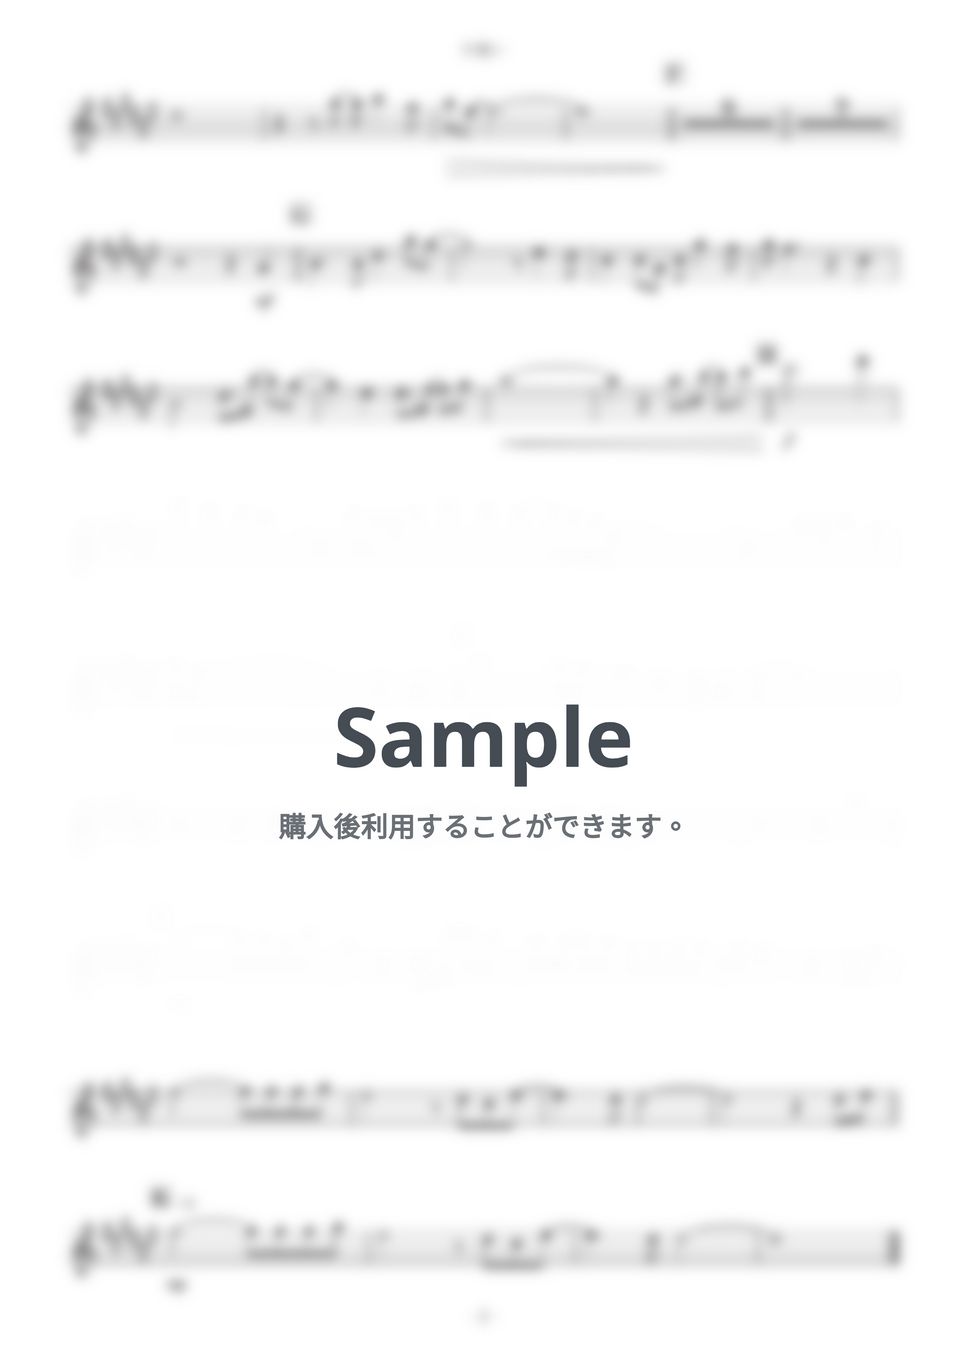 浜田省吾 - 片想い (E♭) by kanamusic